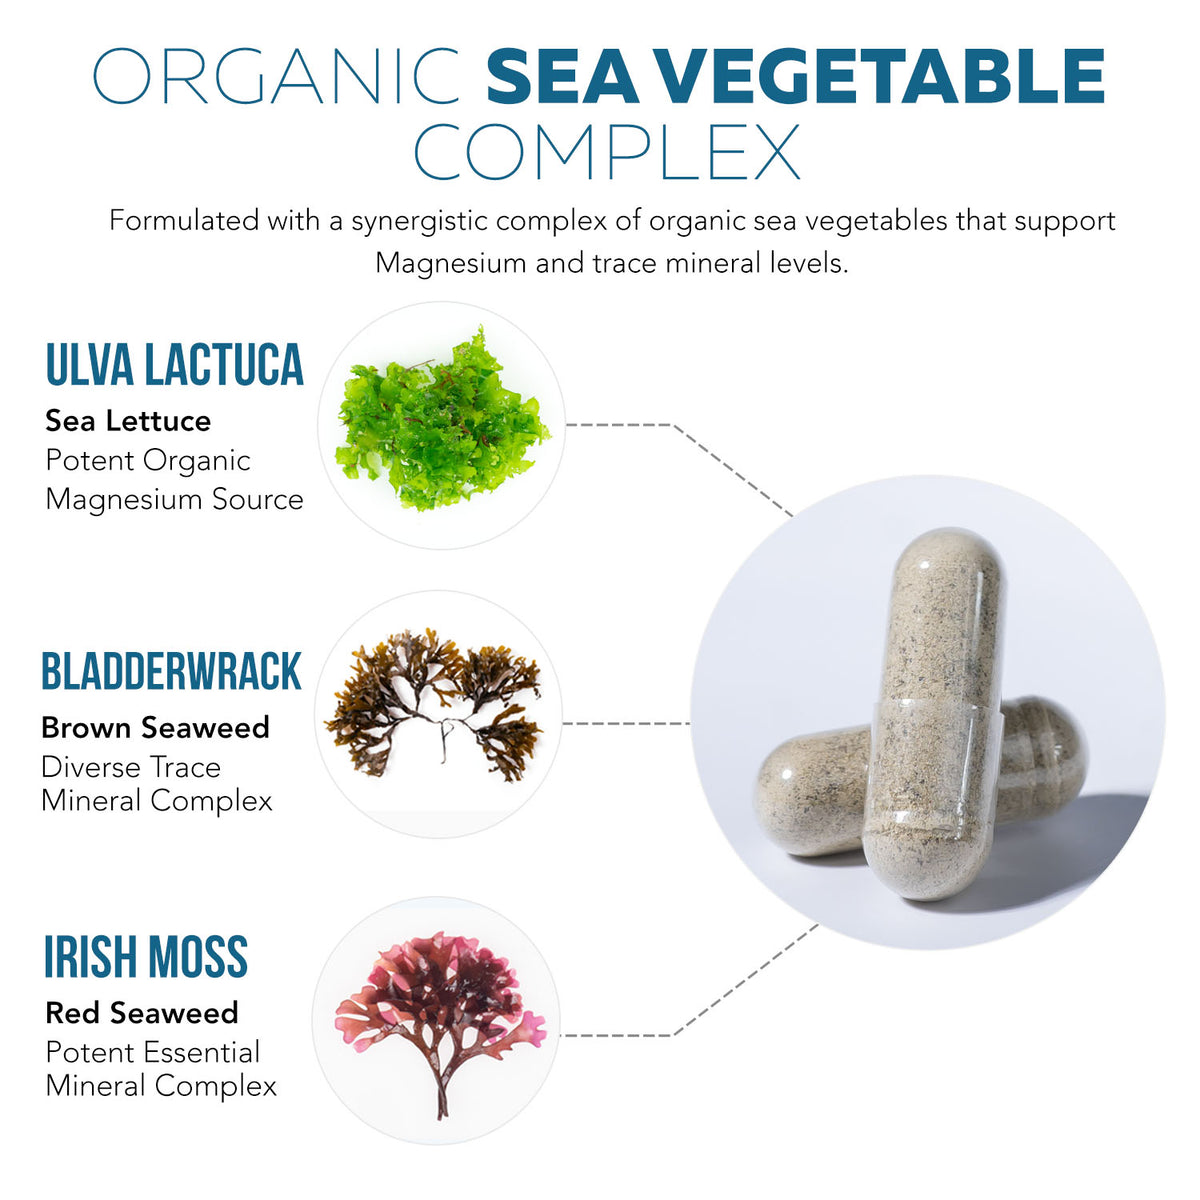 Plant Magnesium: Organic, Whole Food Magnesium Supplement